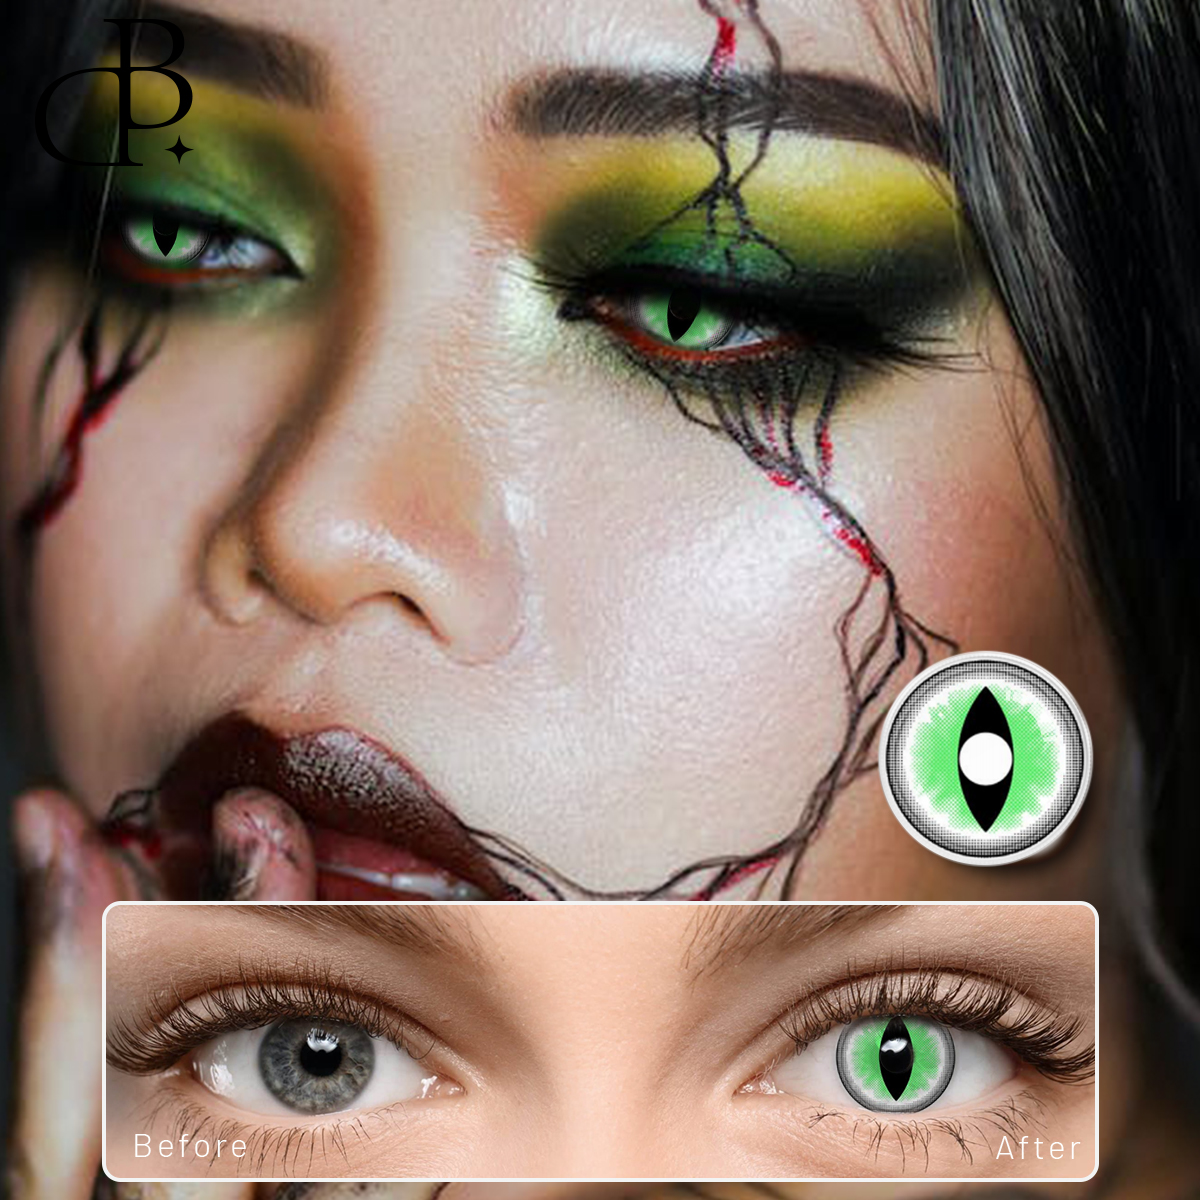 CE ISO fektheri ka ho toba wholesale theko e tlaase DBeyes super natural colored contacts cosmetic green color contact lenses